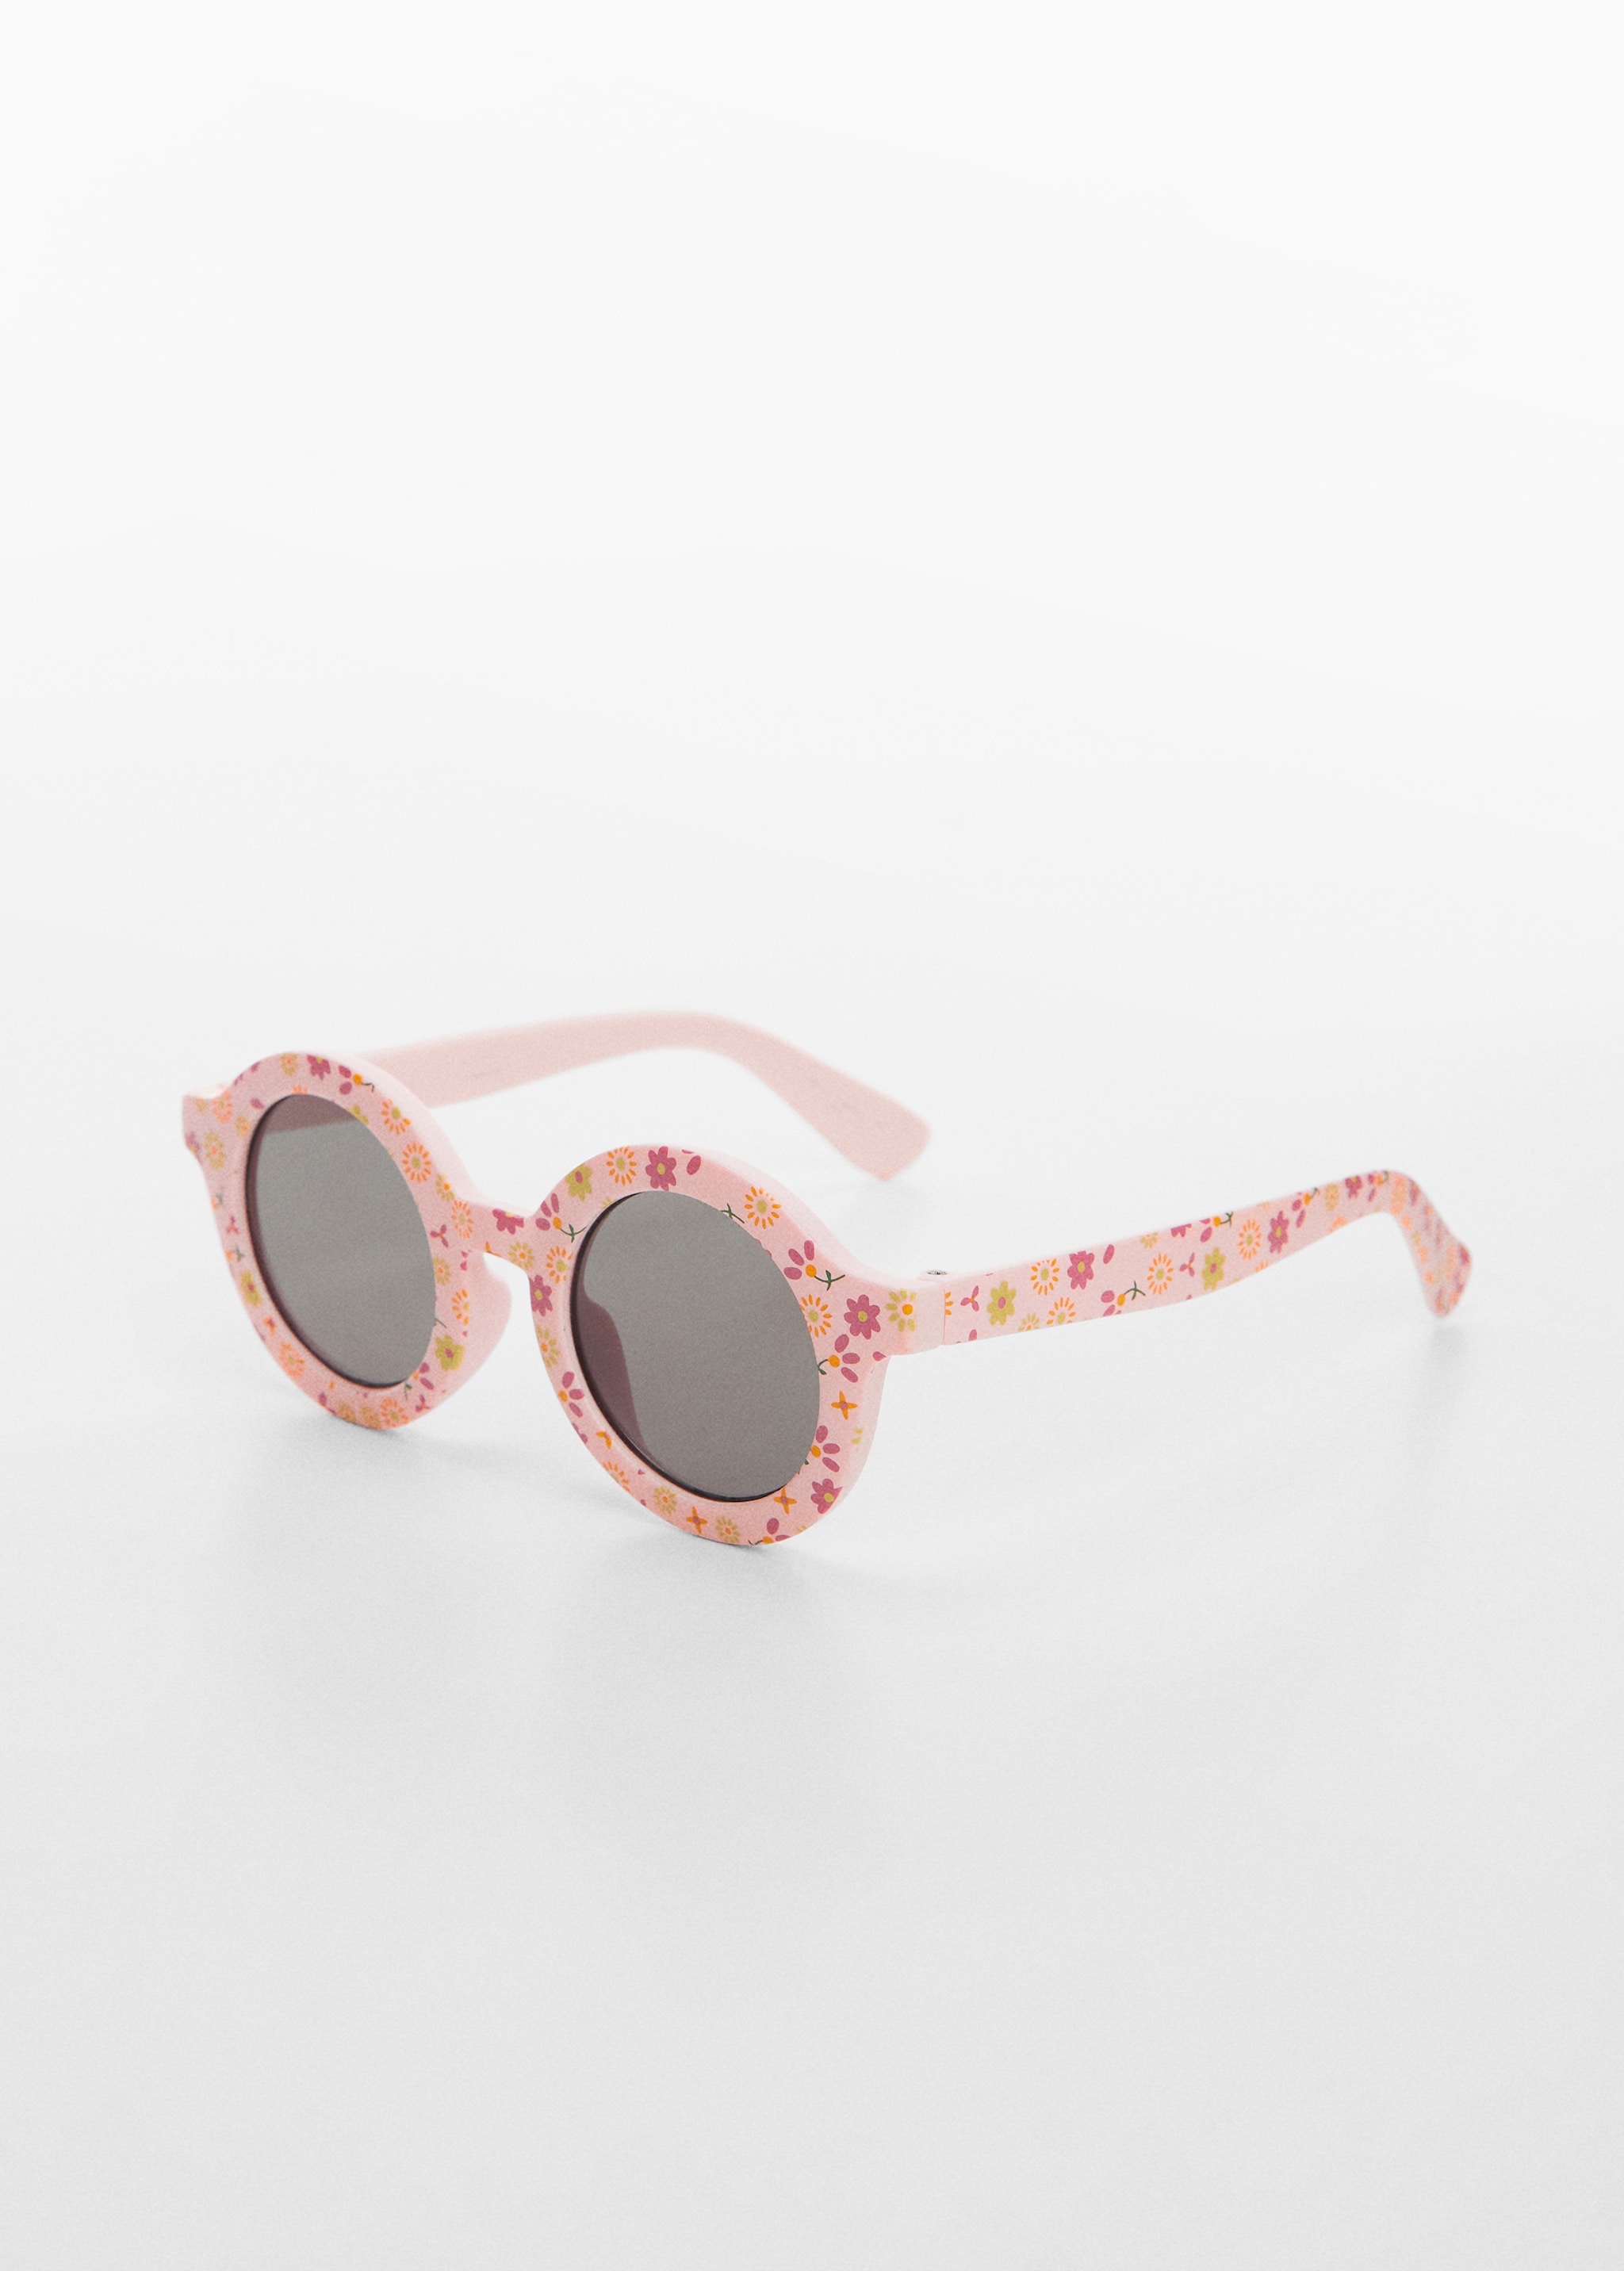 Printed frame sunglasses - Medium plane